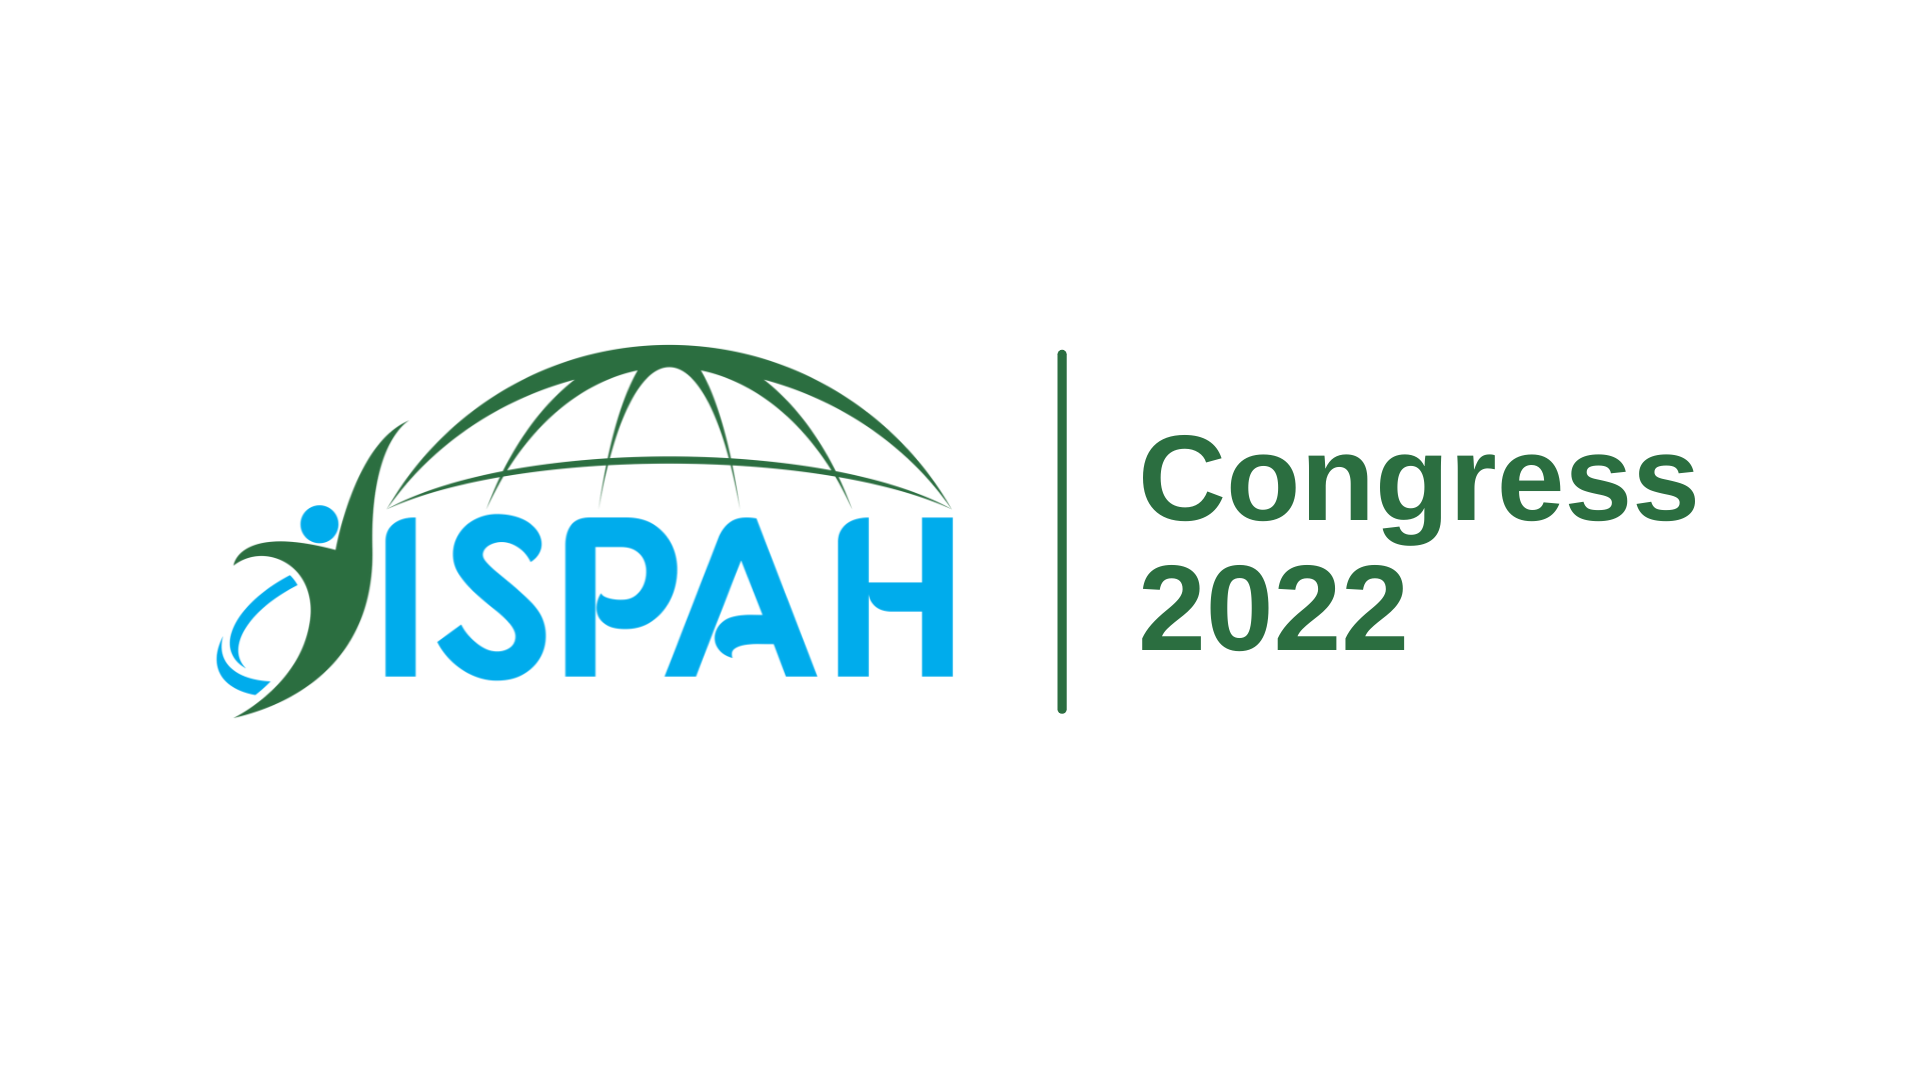 ISPAH Congress 2022 website full of useful information!